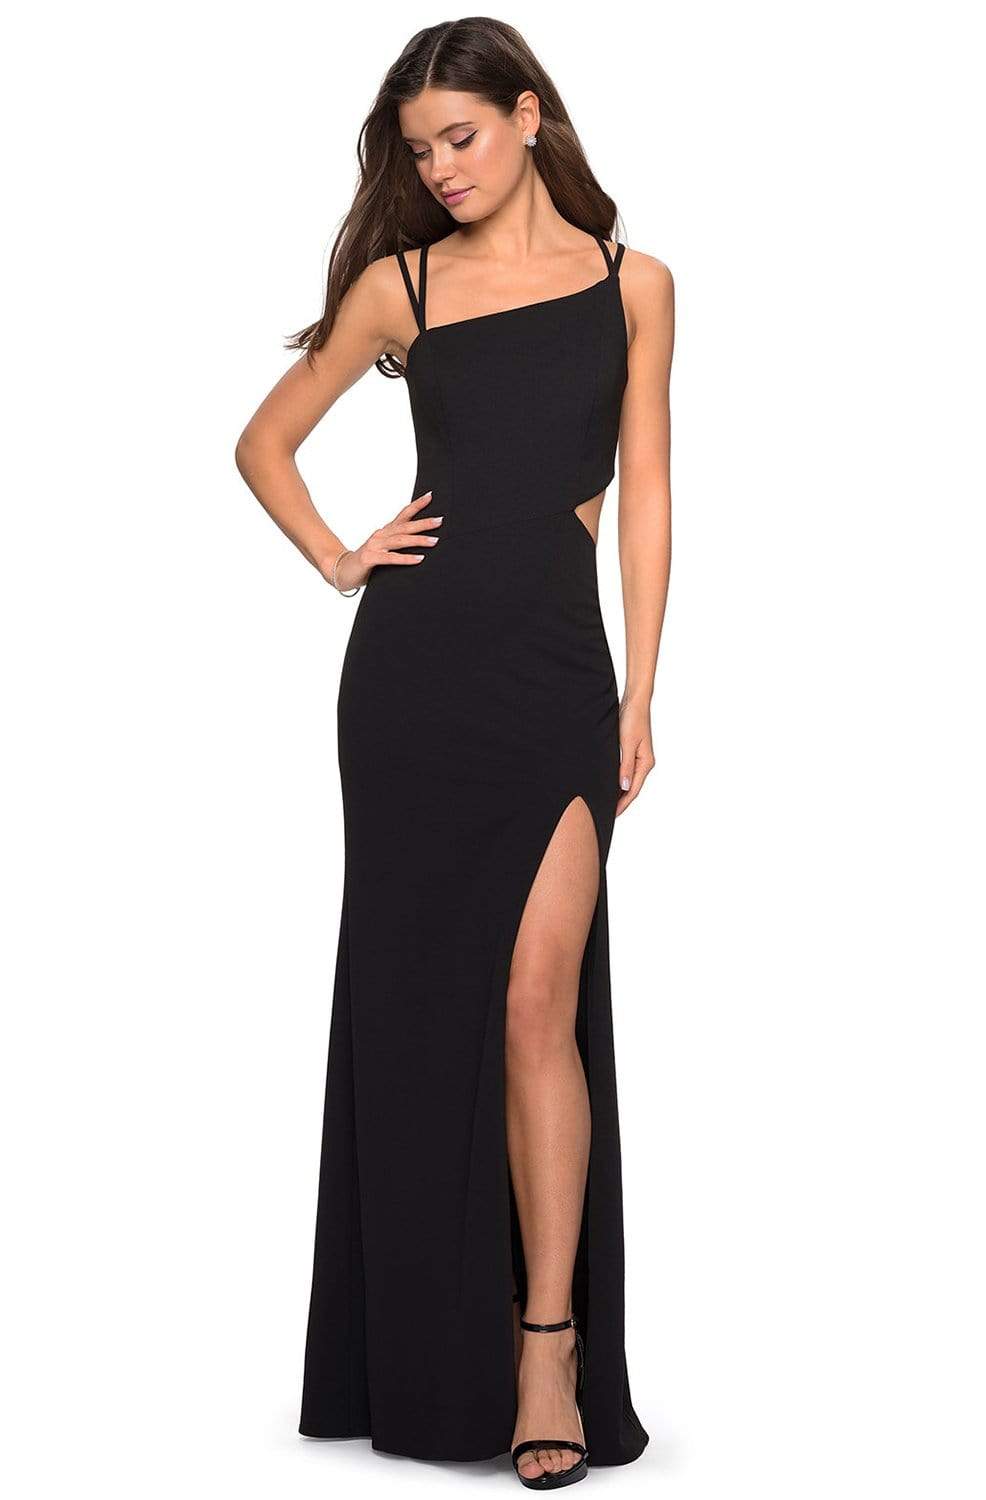 Image of La Femme - 27126 Asymmetrical Neckline Strappy Jersey Evening Dress